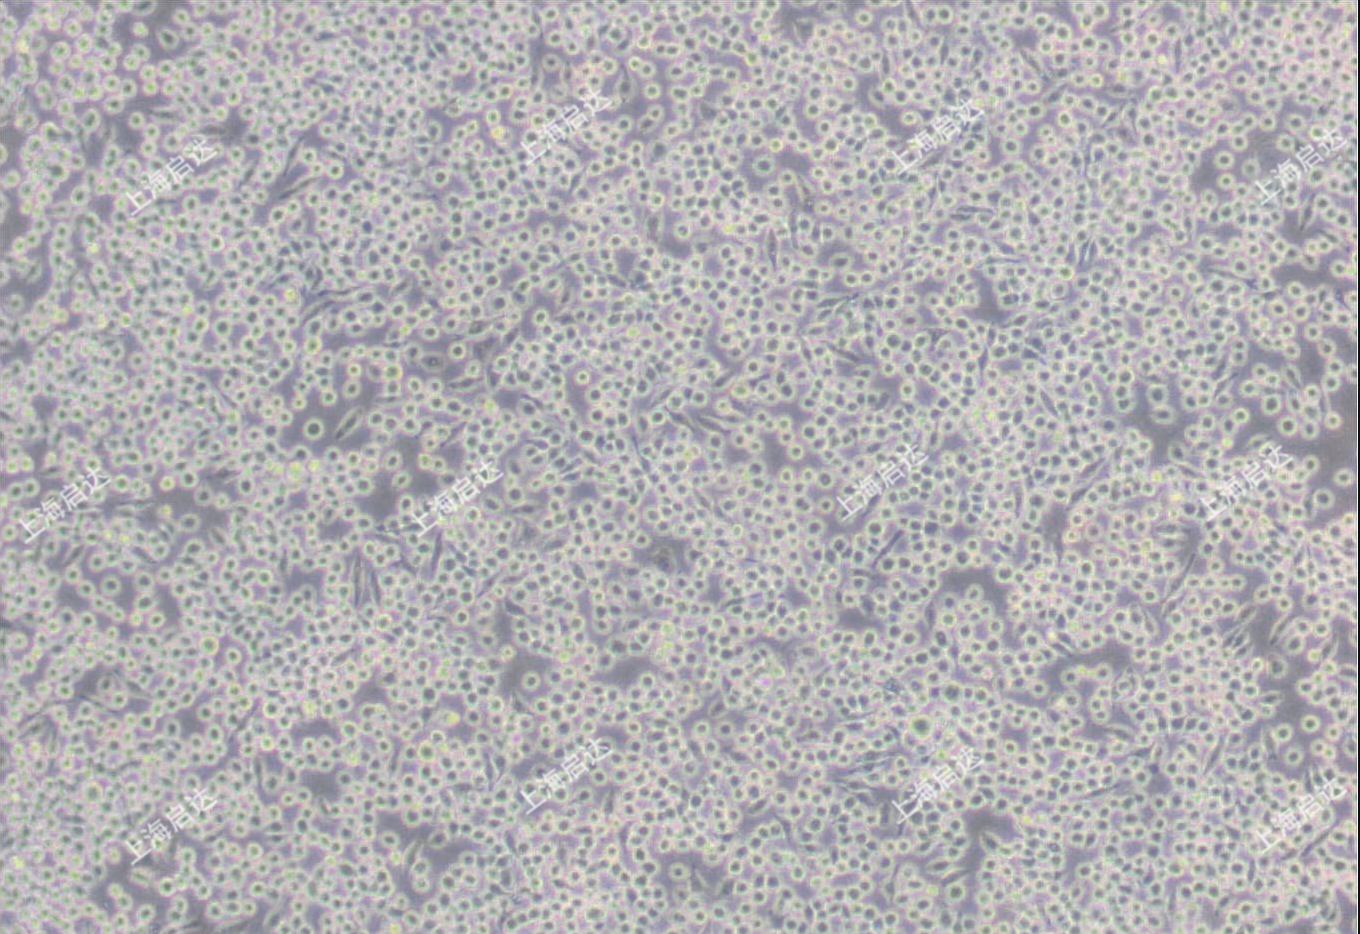 J774A.1小鼠单核巨噬细胞